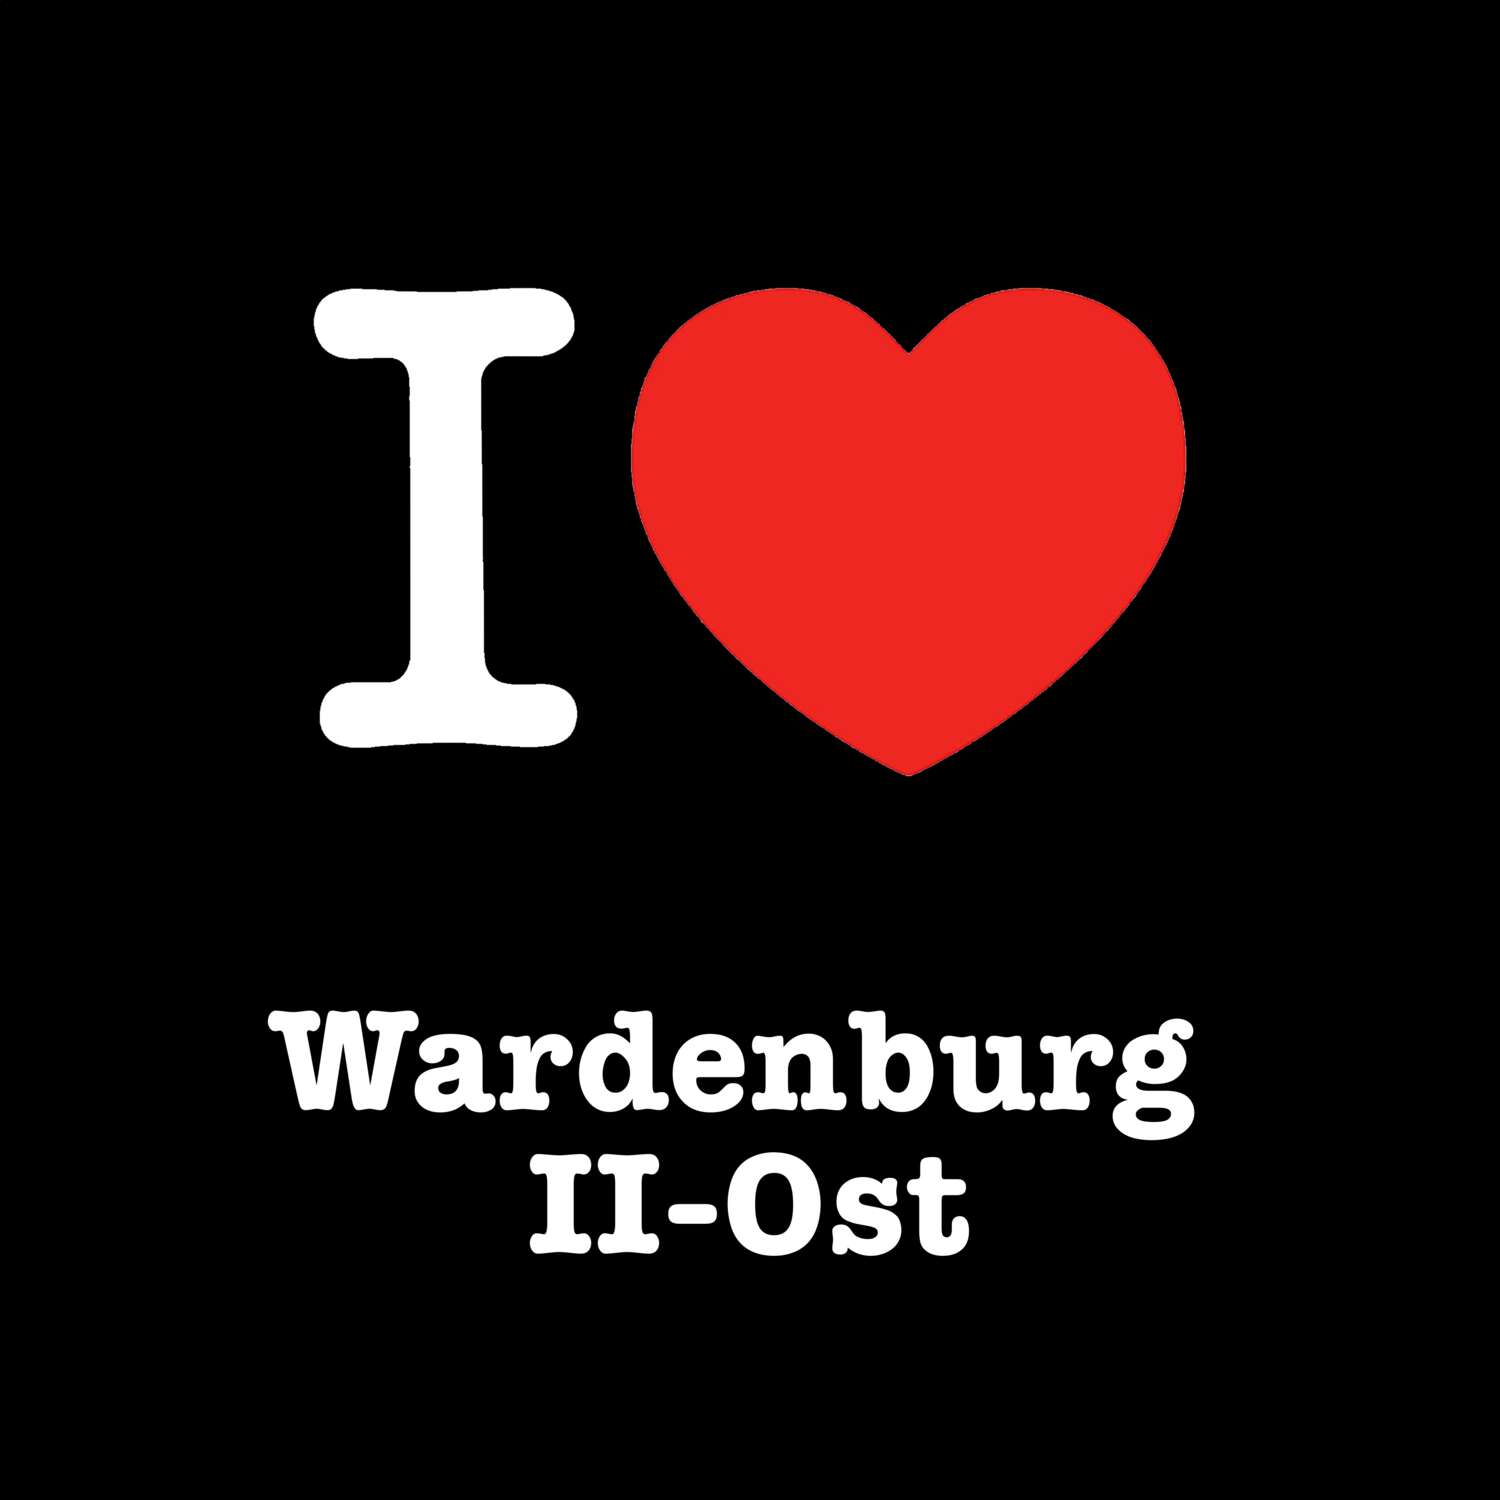 Wardenburg II-Ost T-Shirt »I love«